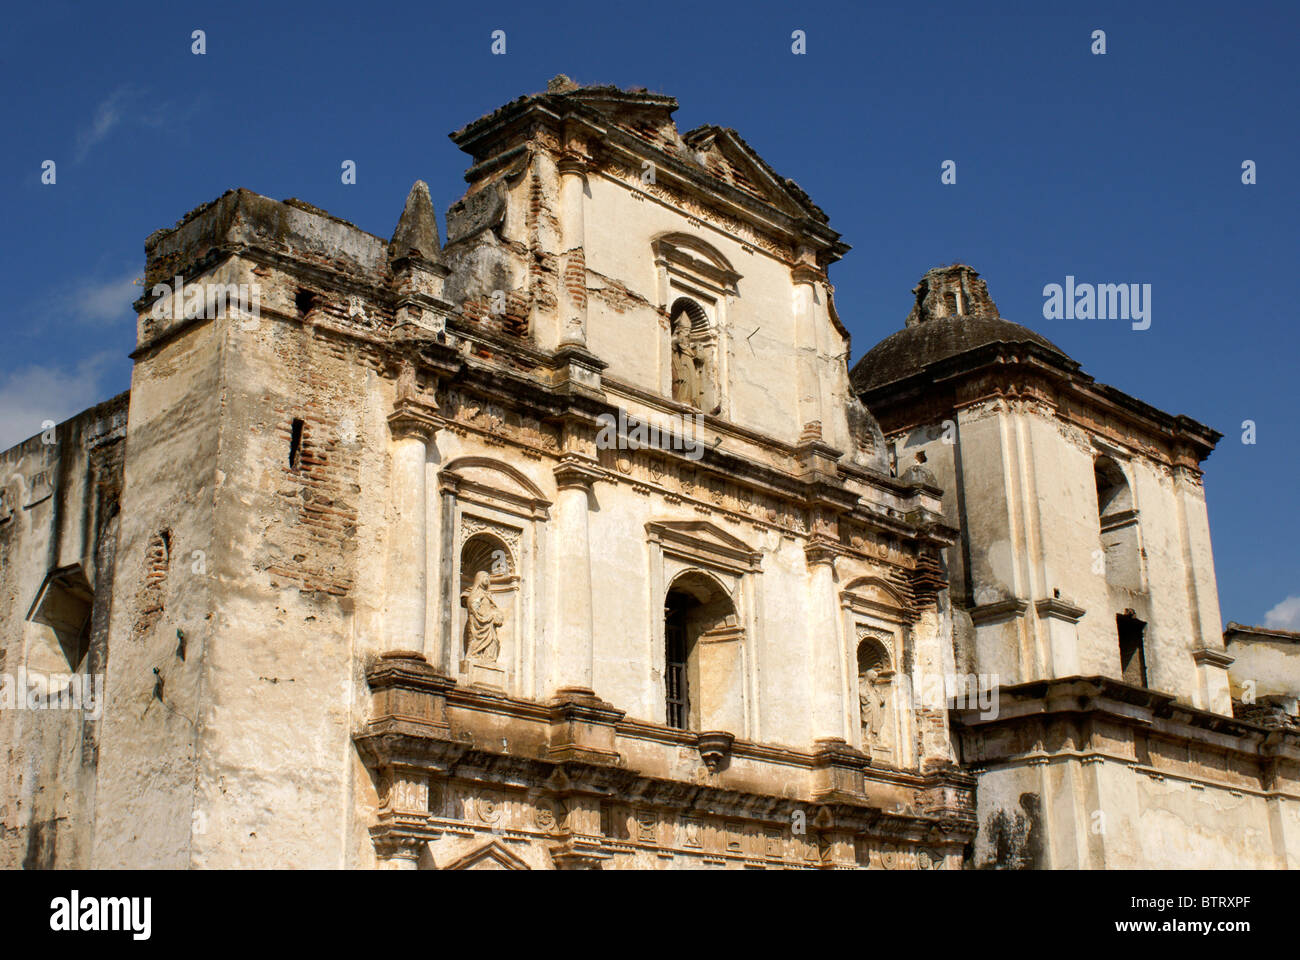 Iglesia San Augustin or Saint Augustine Church in Antigua, Guatemala. Antigua is a UNESCO World heritage site. Stock Photo